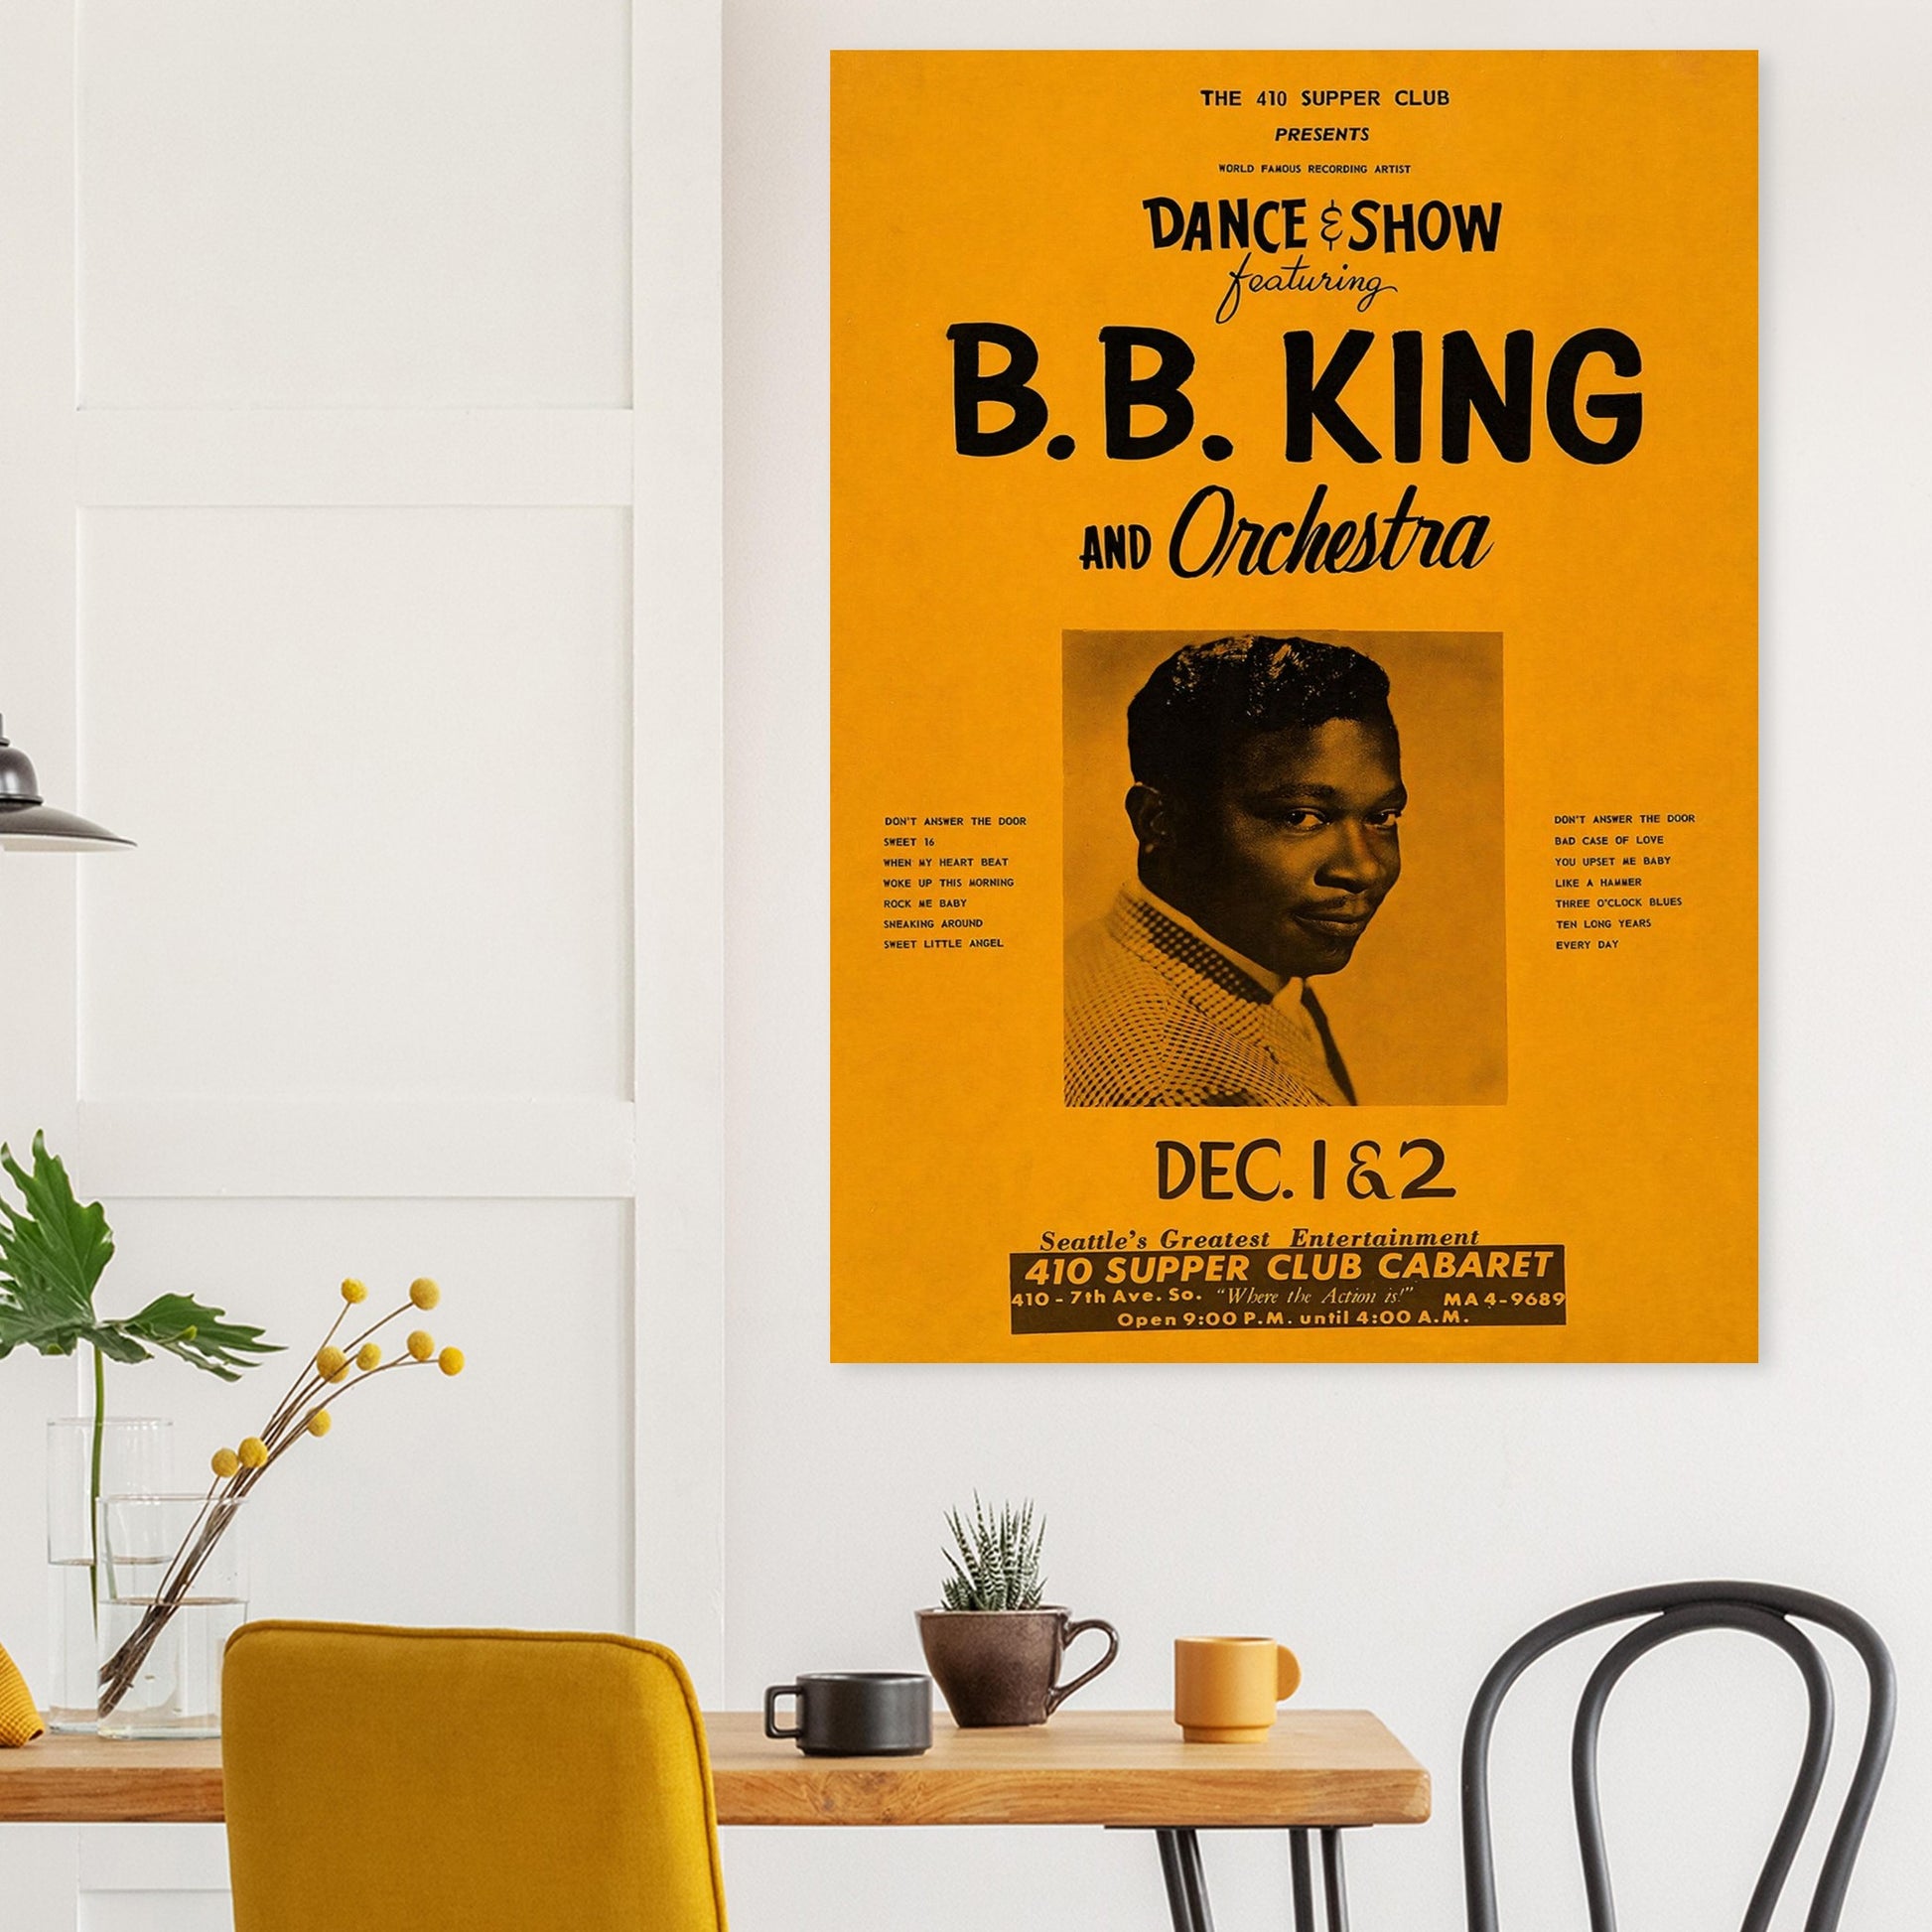 BB King Vintage Poster Reprint on Premium Matte Paper - Posterify